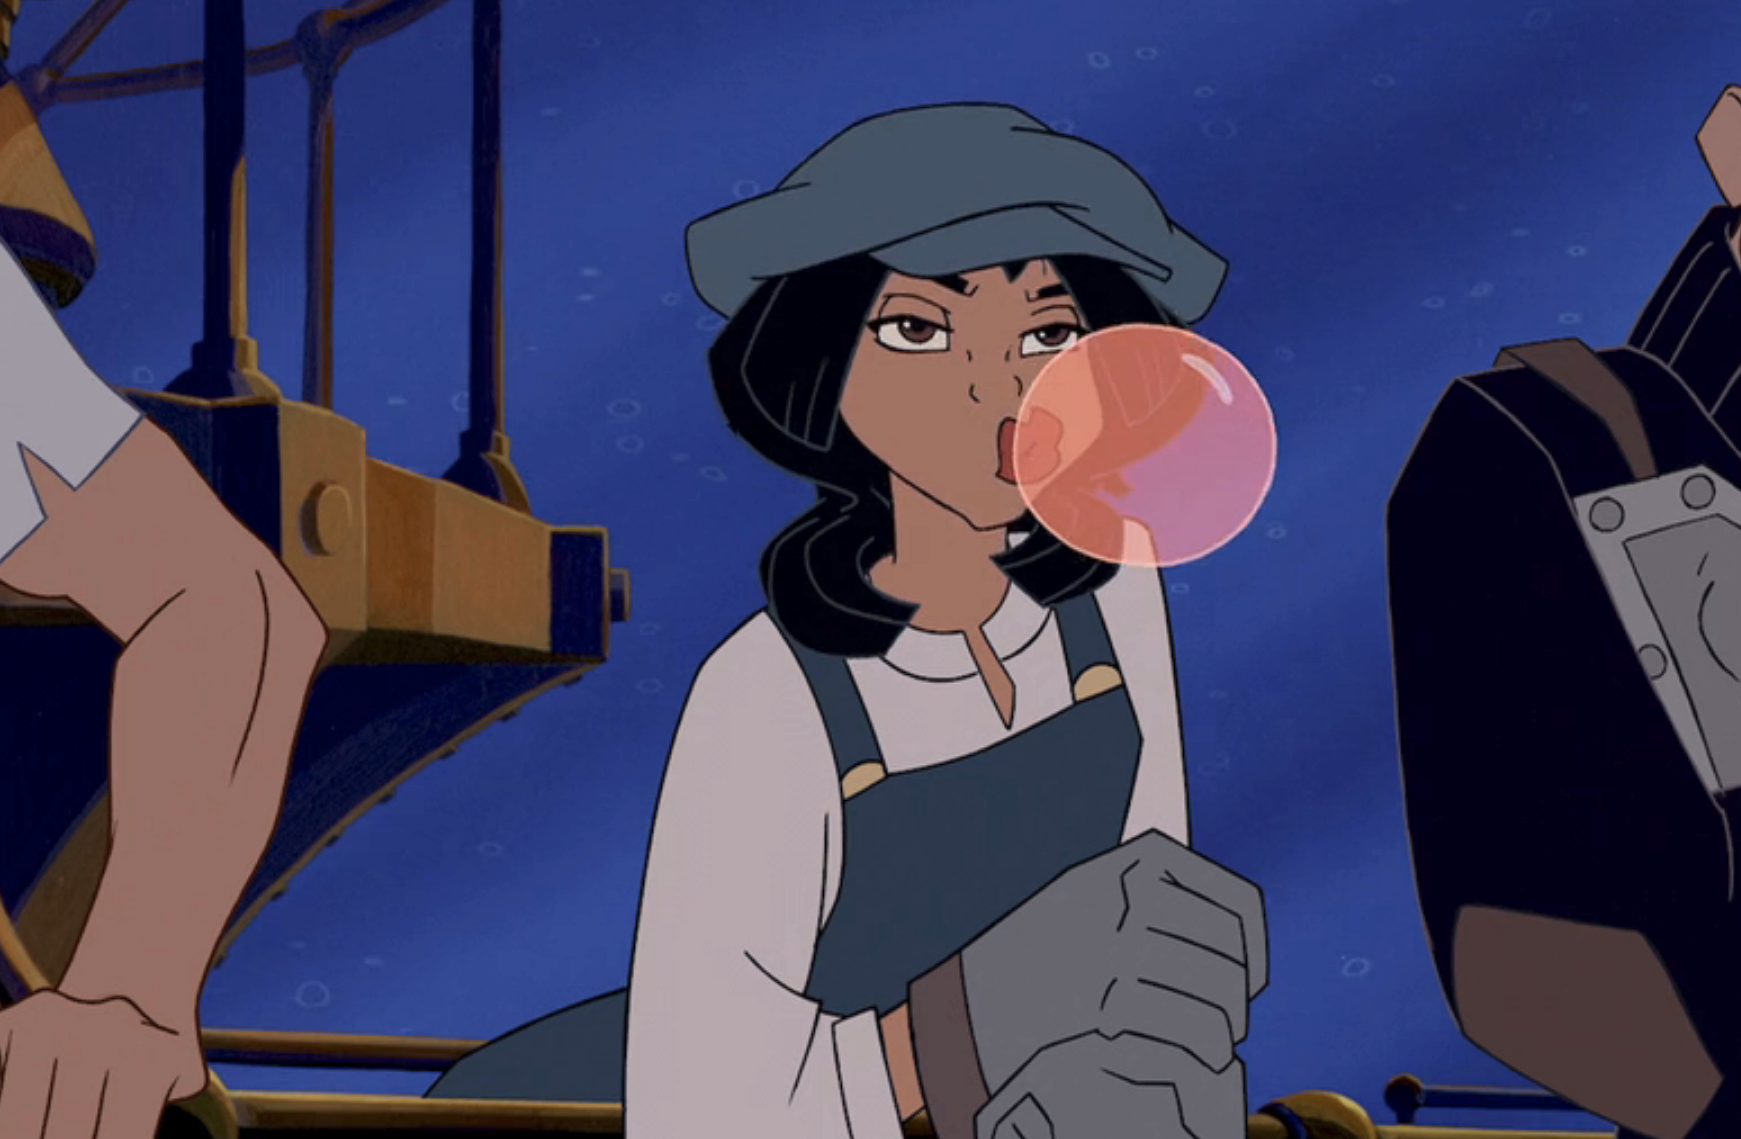 Audrey Ramirez blowing a bubble with her gum